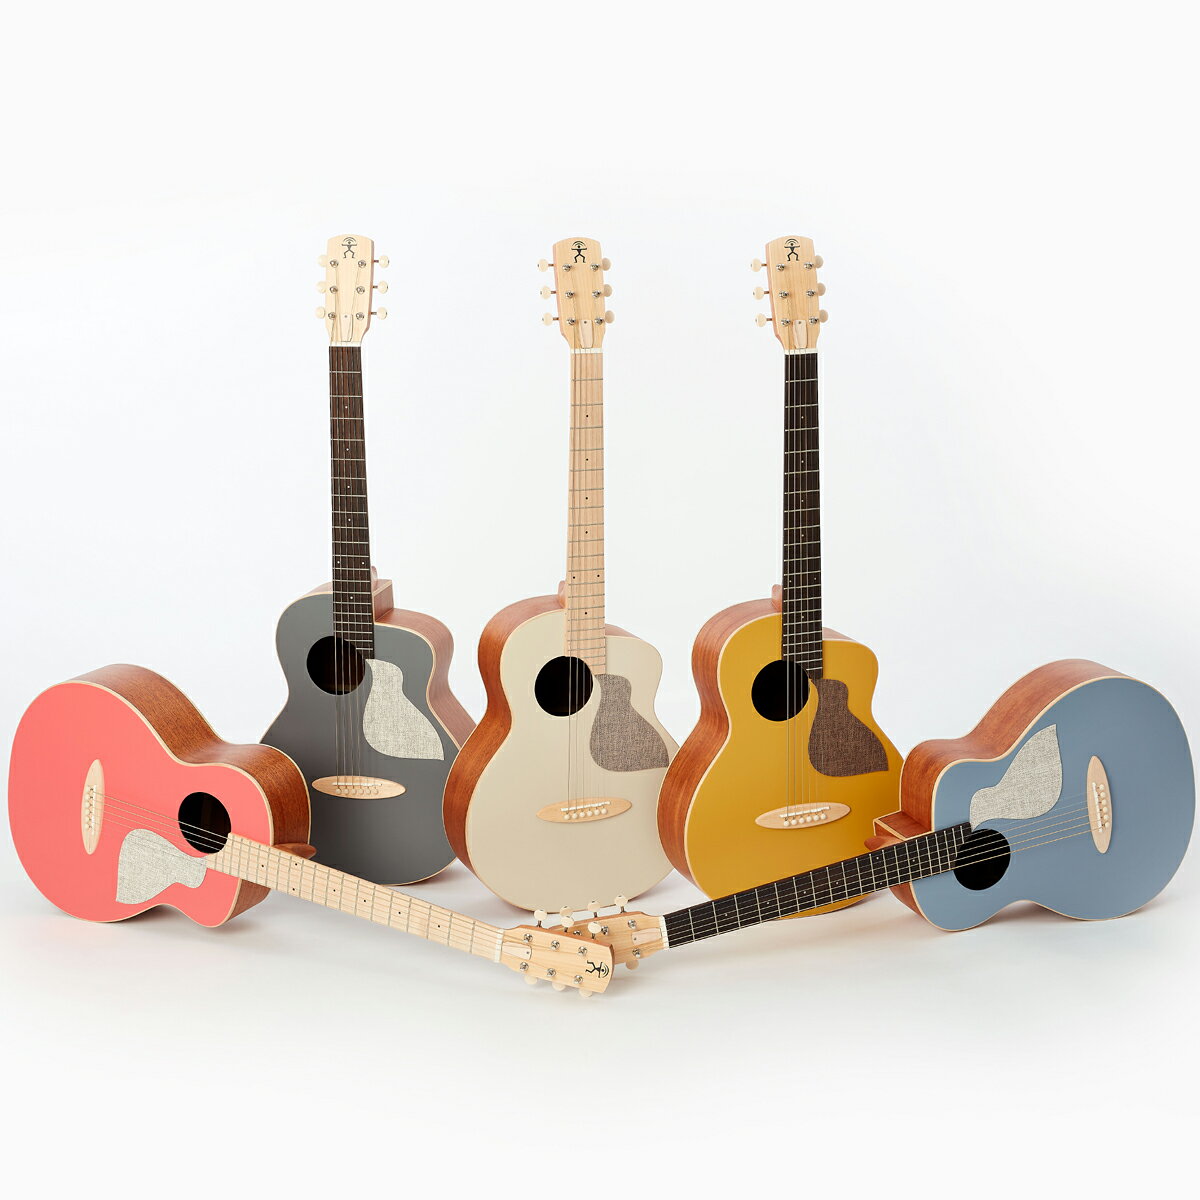 aNueNue Bird Guitar M Color Series MC10 《ピックアップ搭載》 新品[アヌエヌエ][スプルース/マホガニー][バードギター][グレー,ゴールド,ピンク,ブルー,ホワイト][エレアコ][Acoustic Guitar,アコギ,アコースティックギター,Folk Guitar,フォークギター]